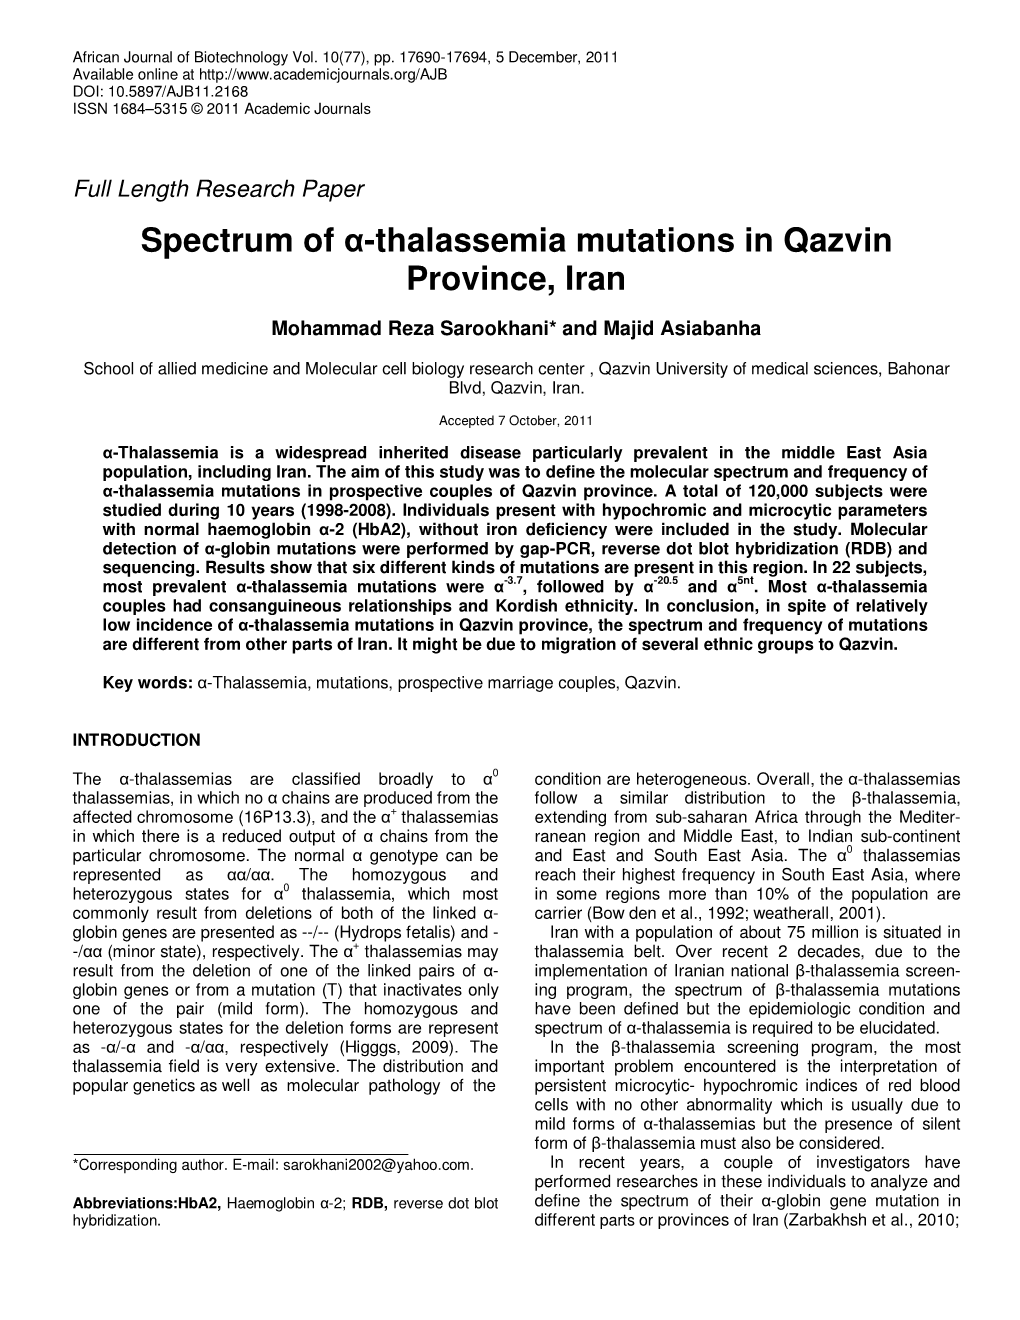 Spectrum of Α-Thalassemia Mutations in Qazvin Province, Iran